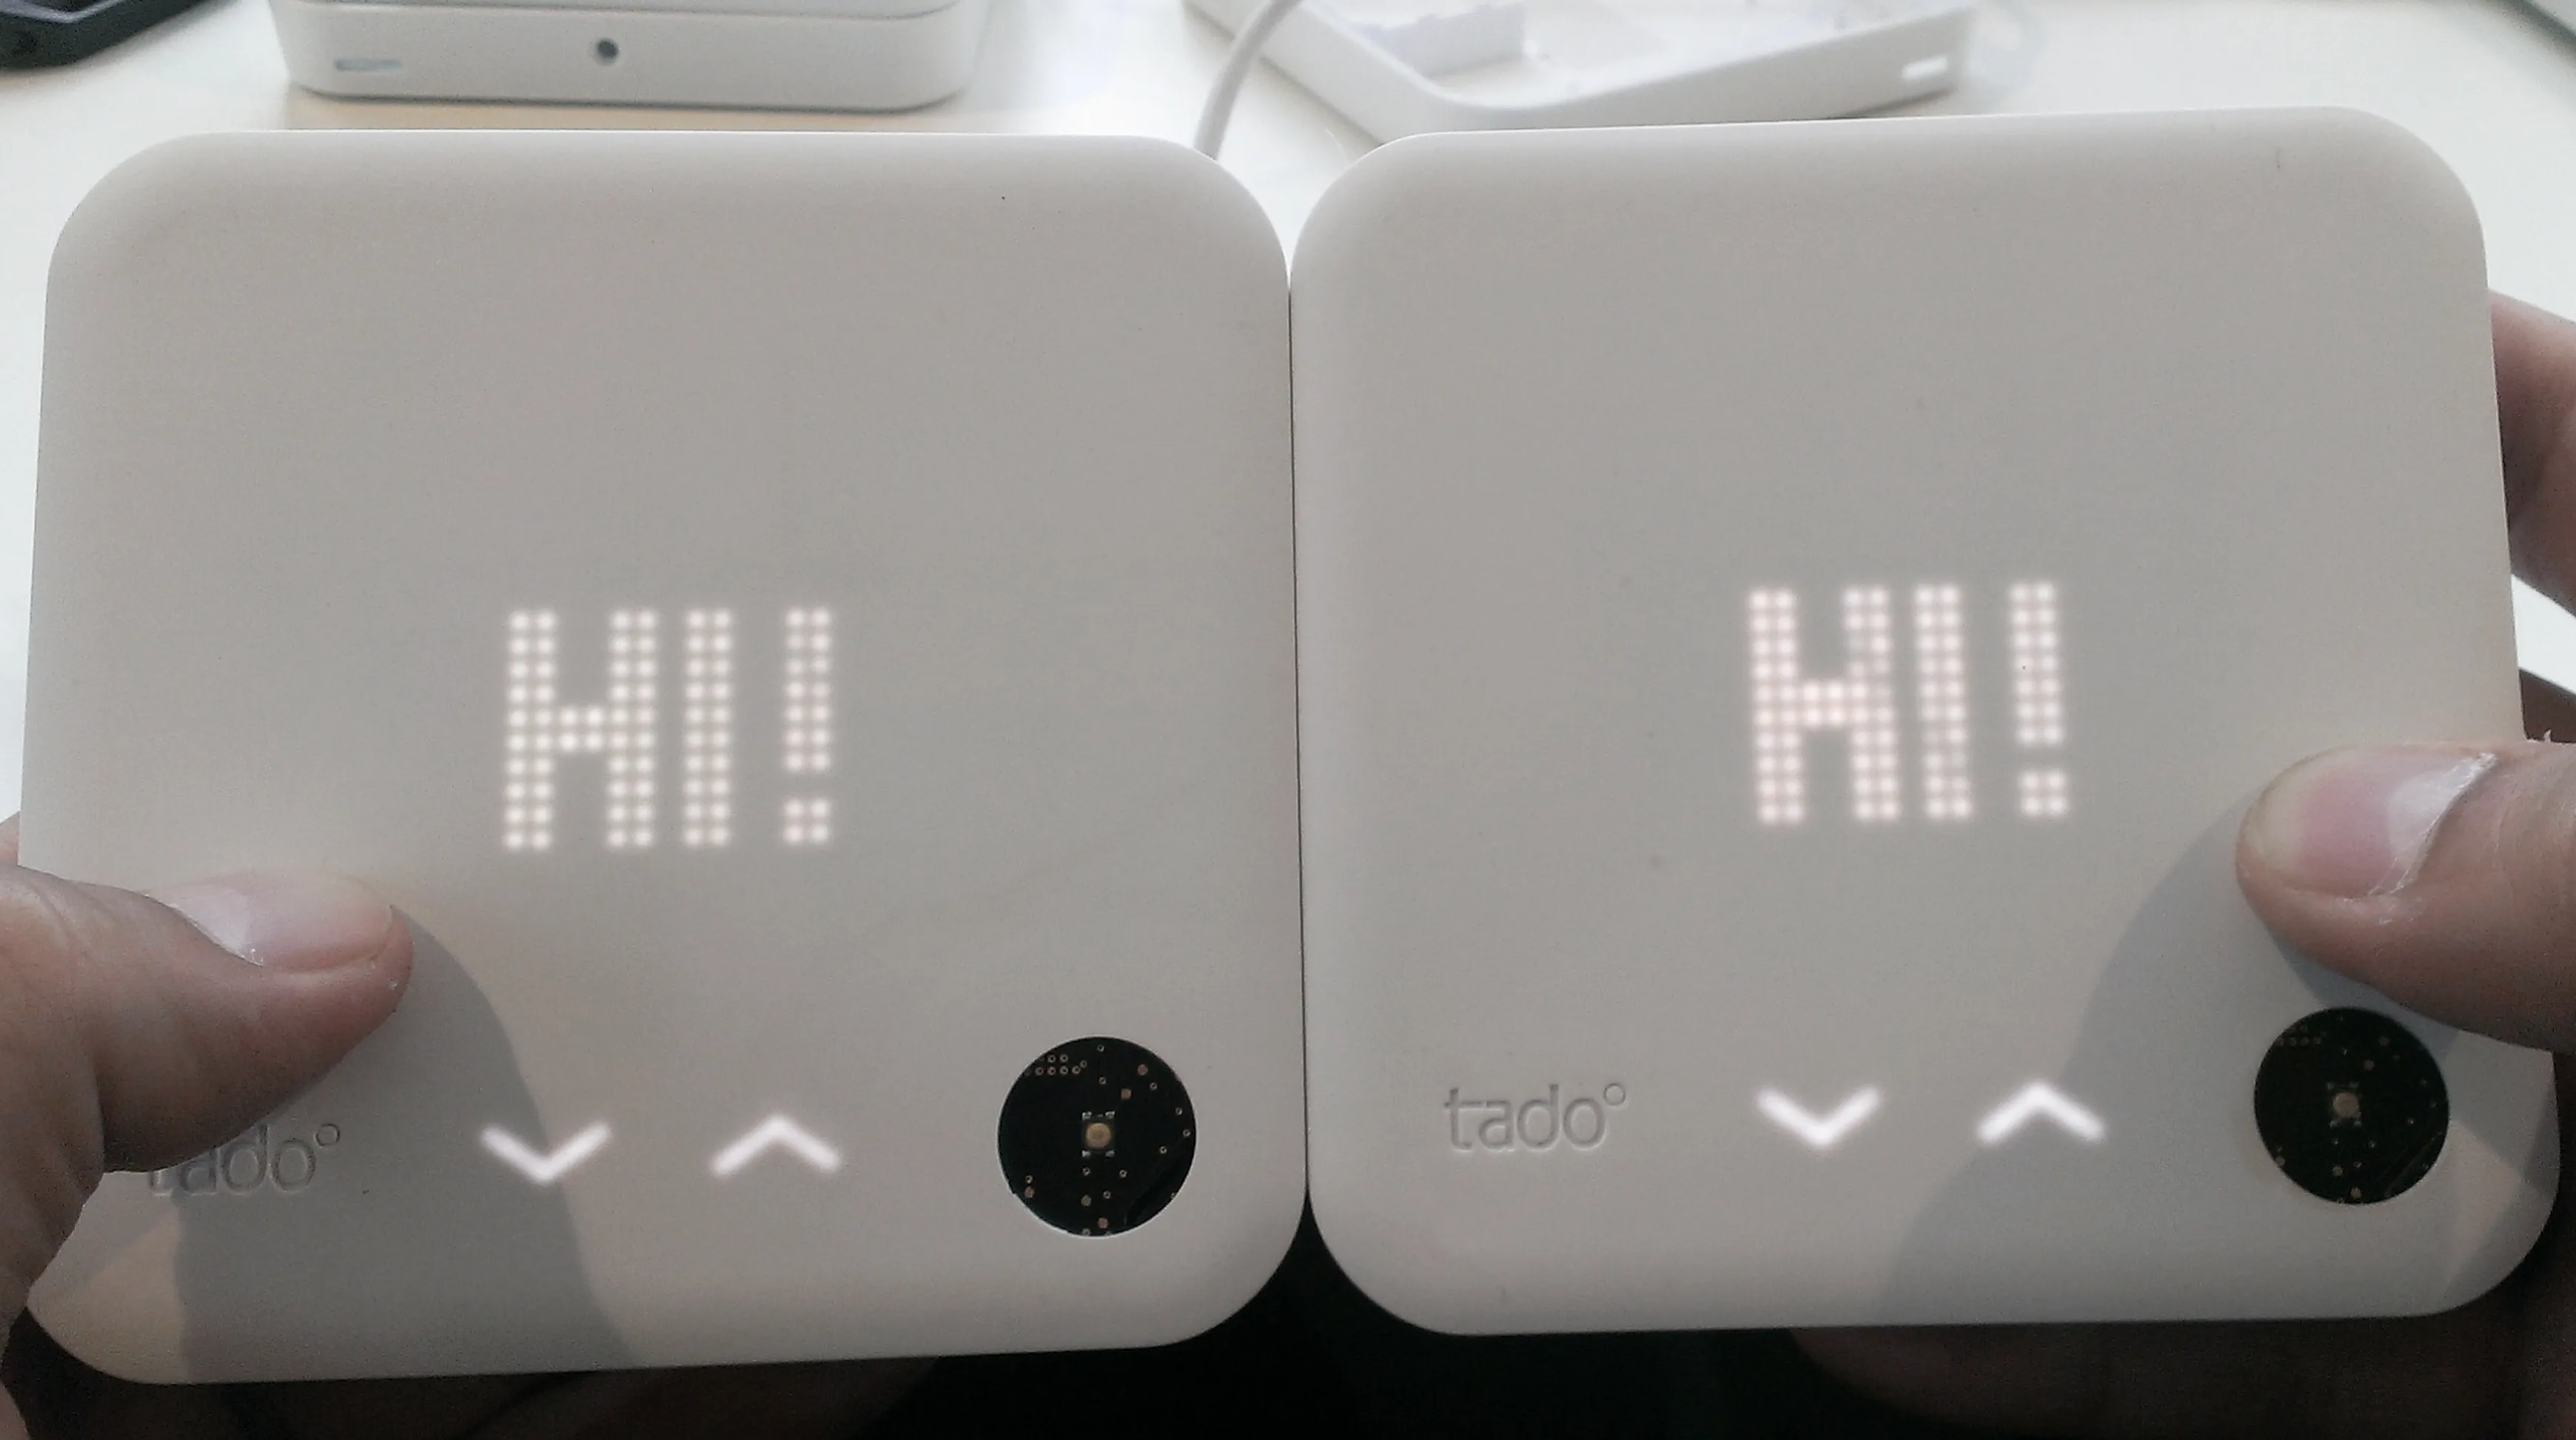 Tado smart thermostats display test